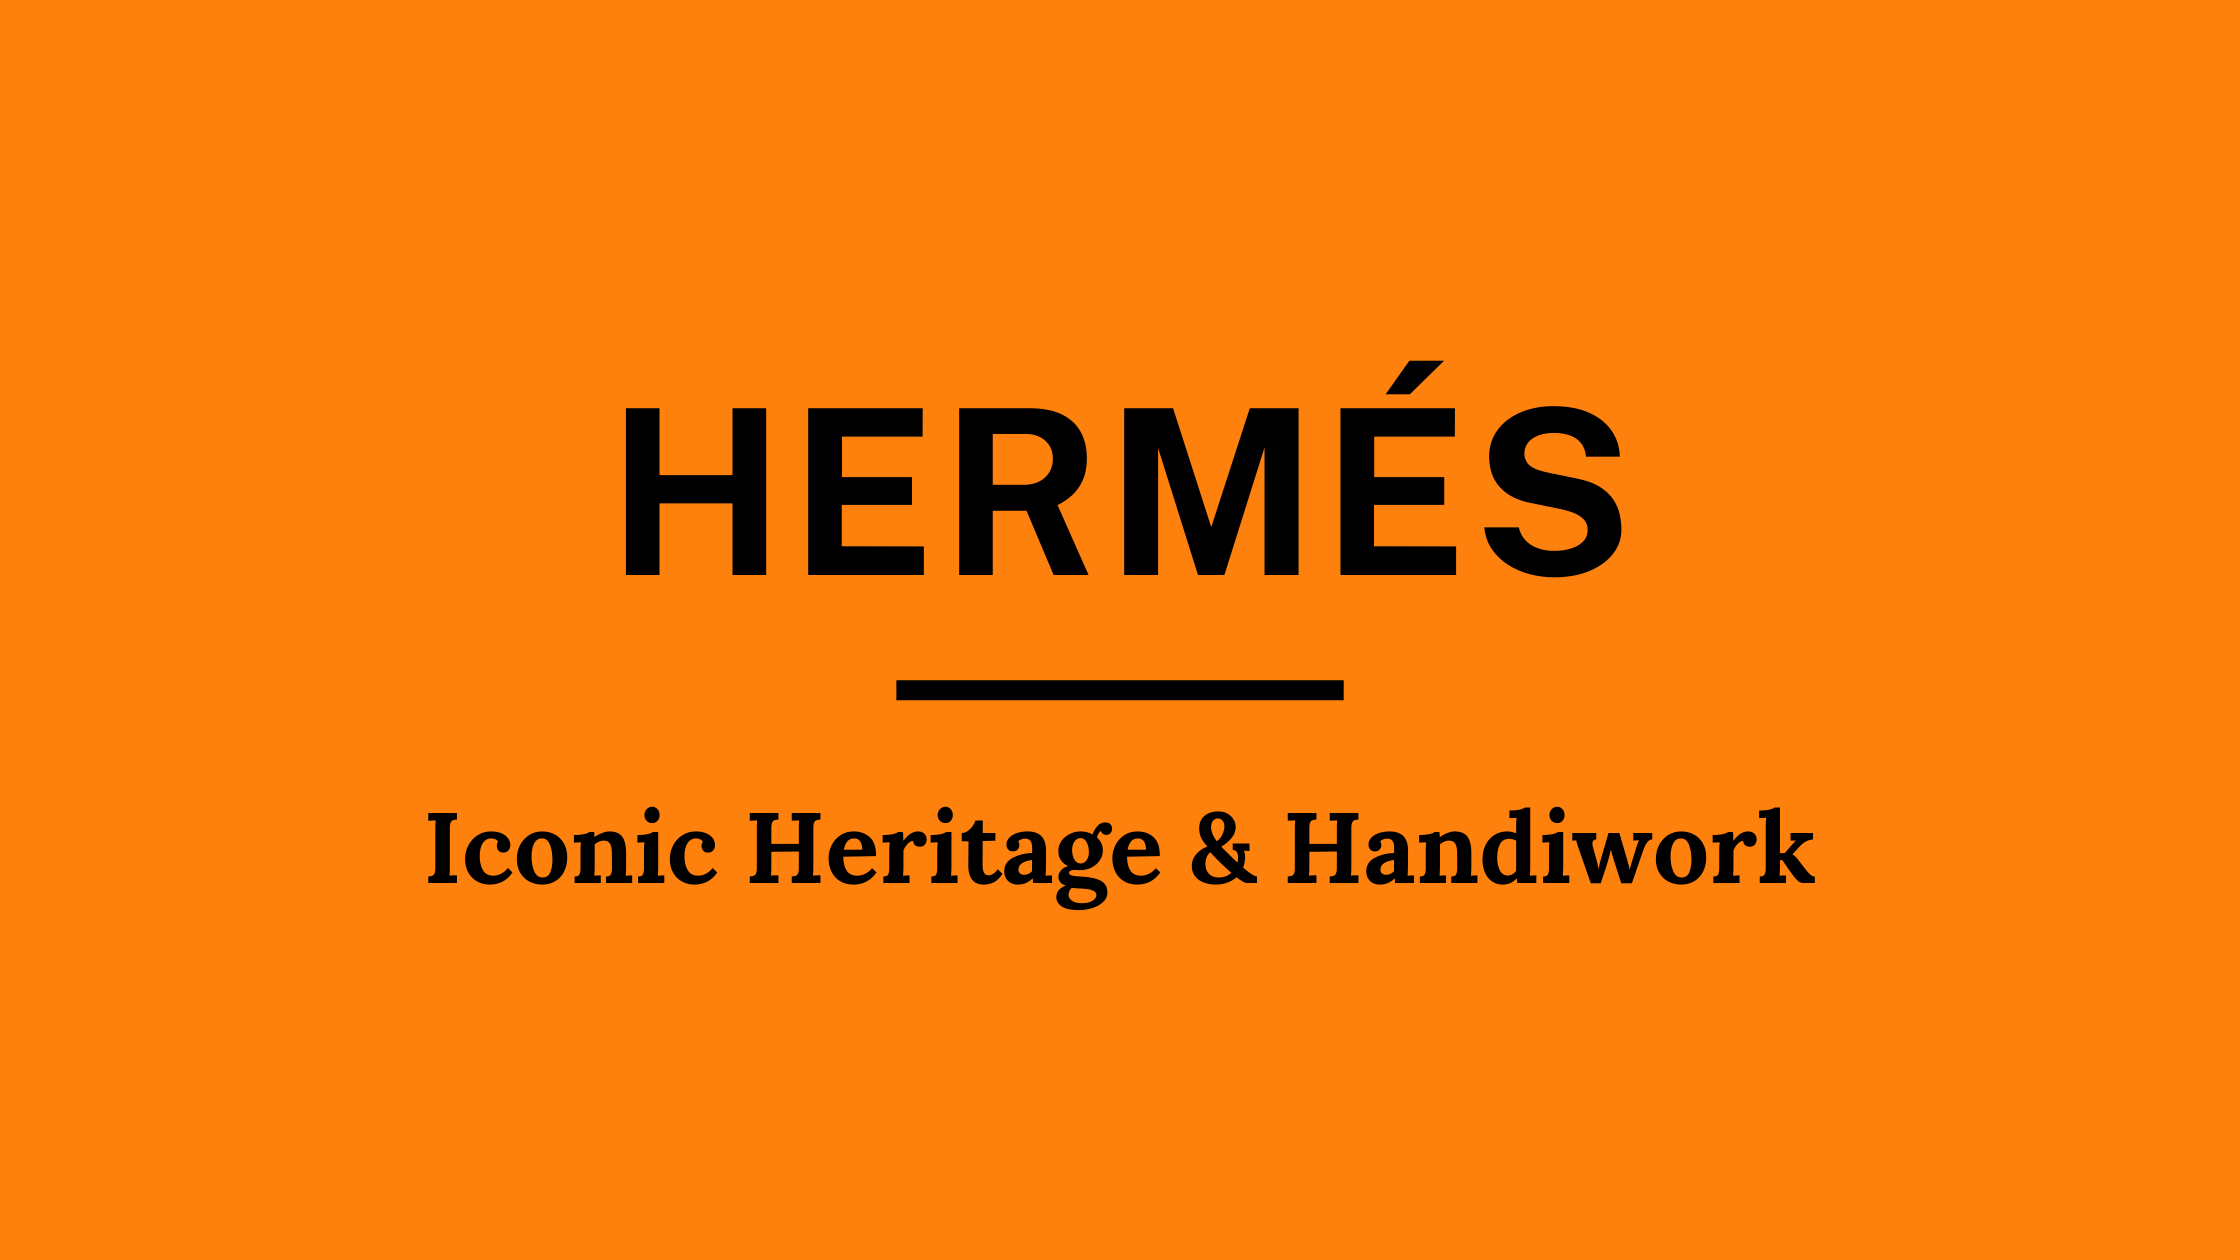 The Heritage & Handiwork of Hermes